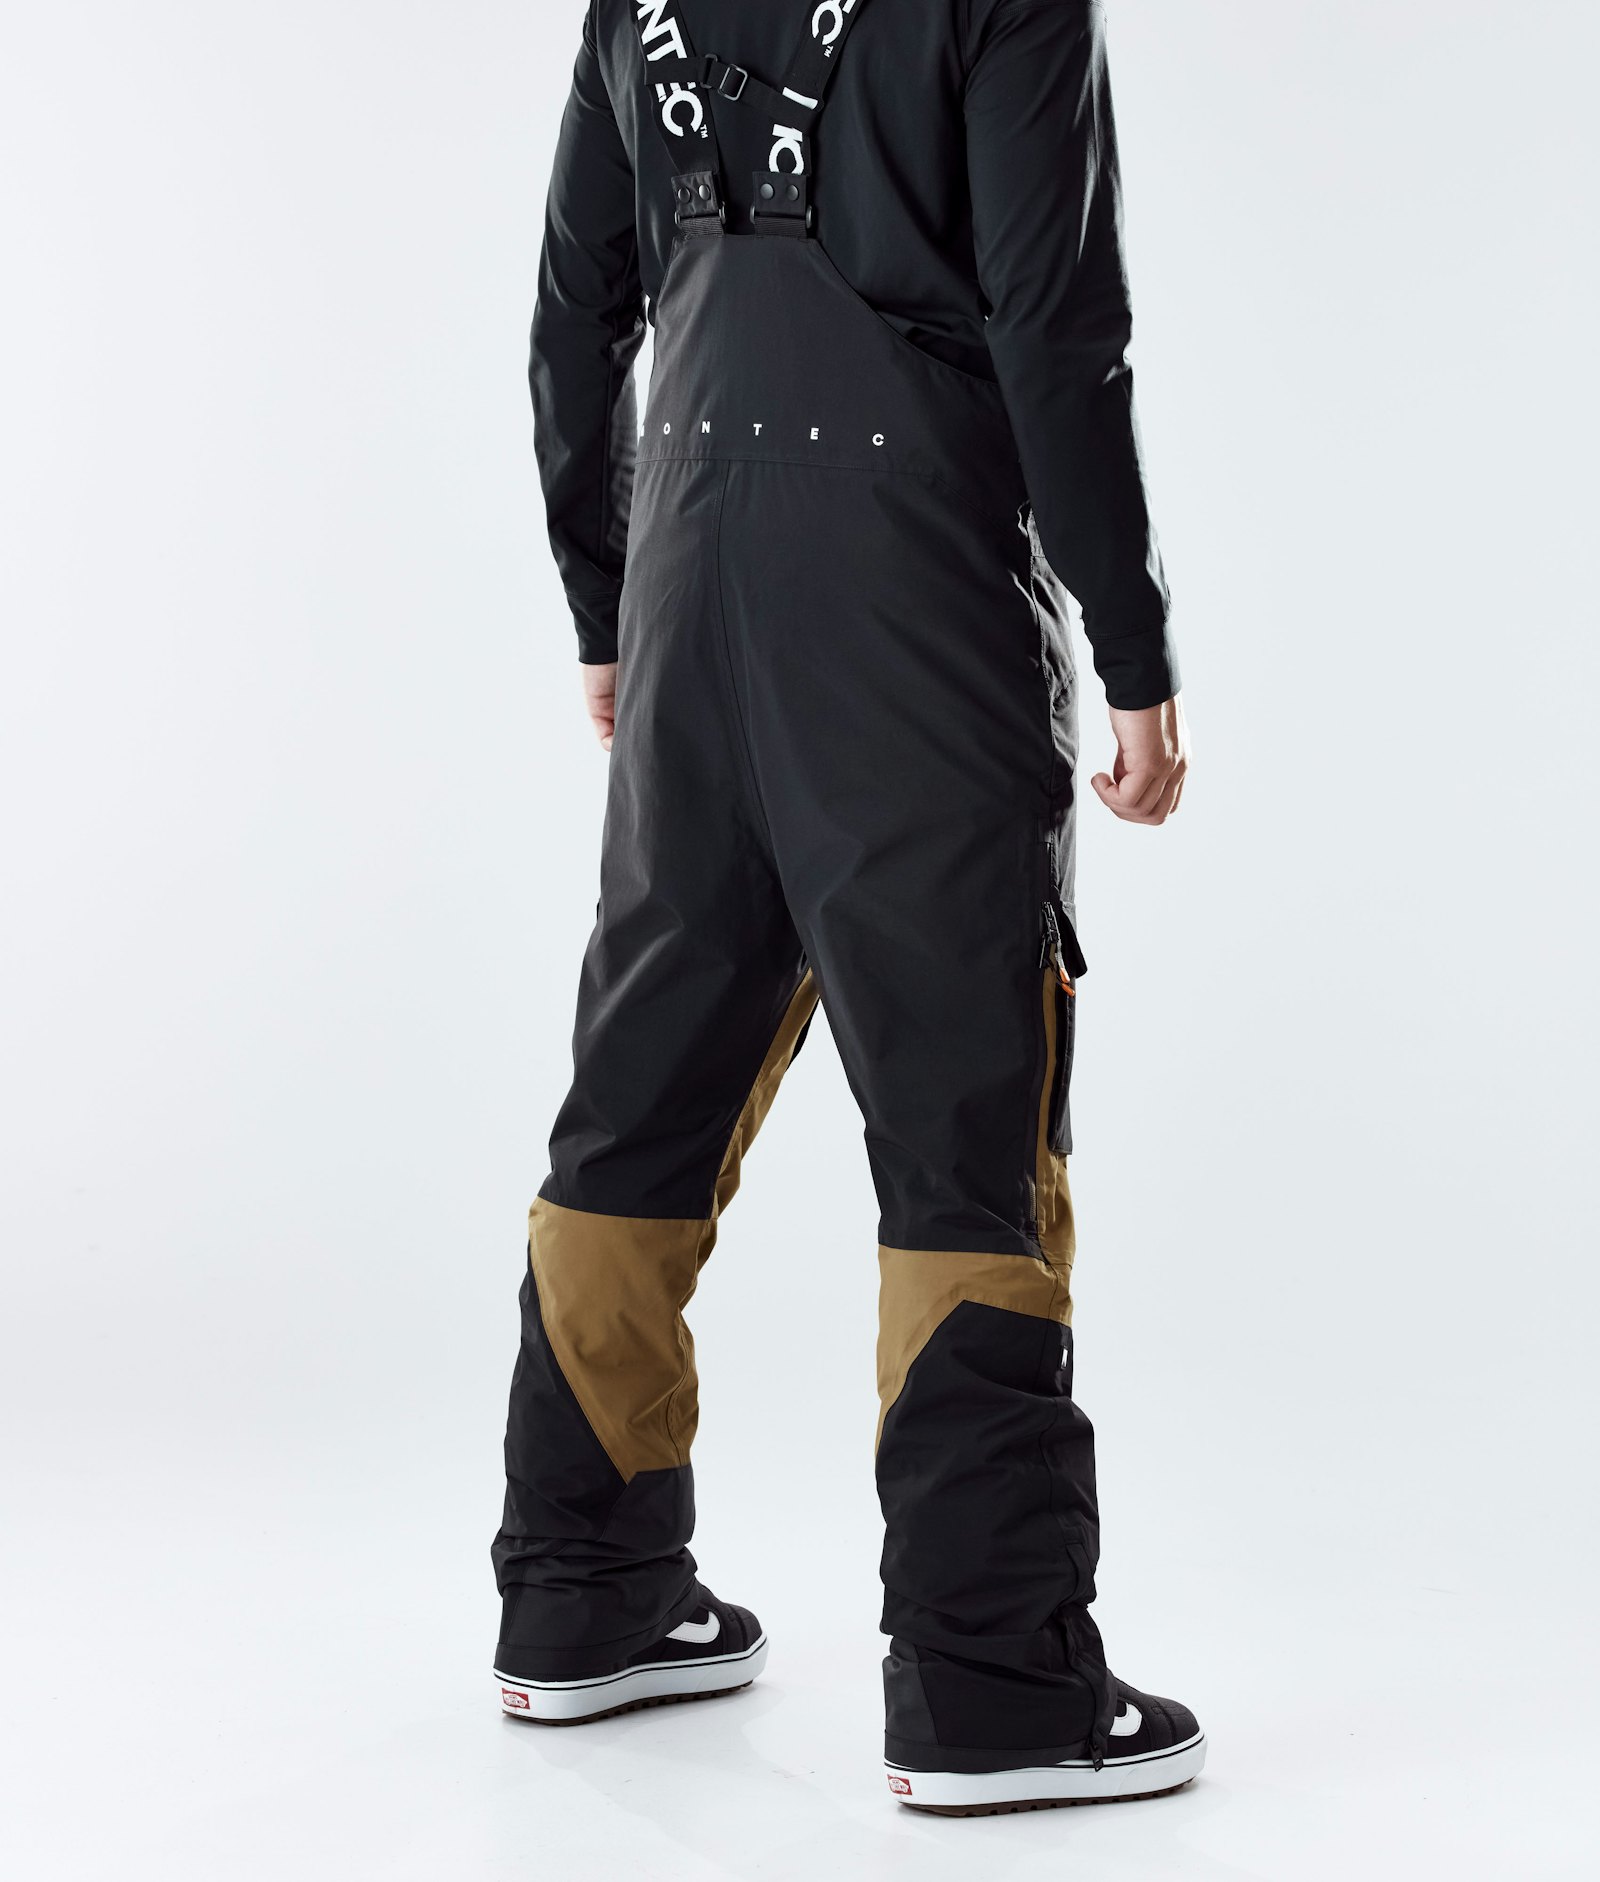 Fawk 2020 Snowboard Pants Men Black/Gold Renewed